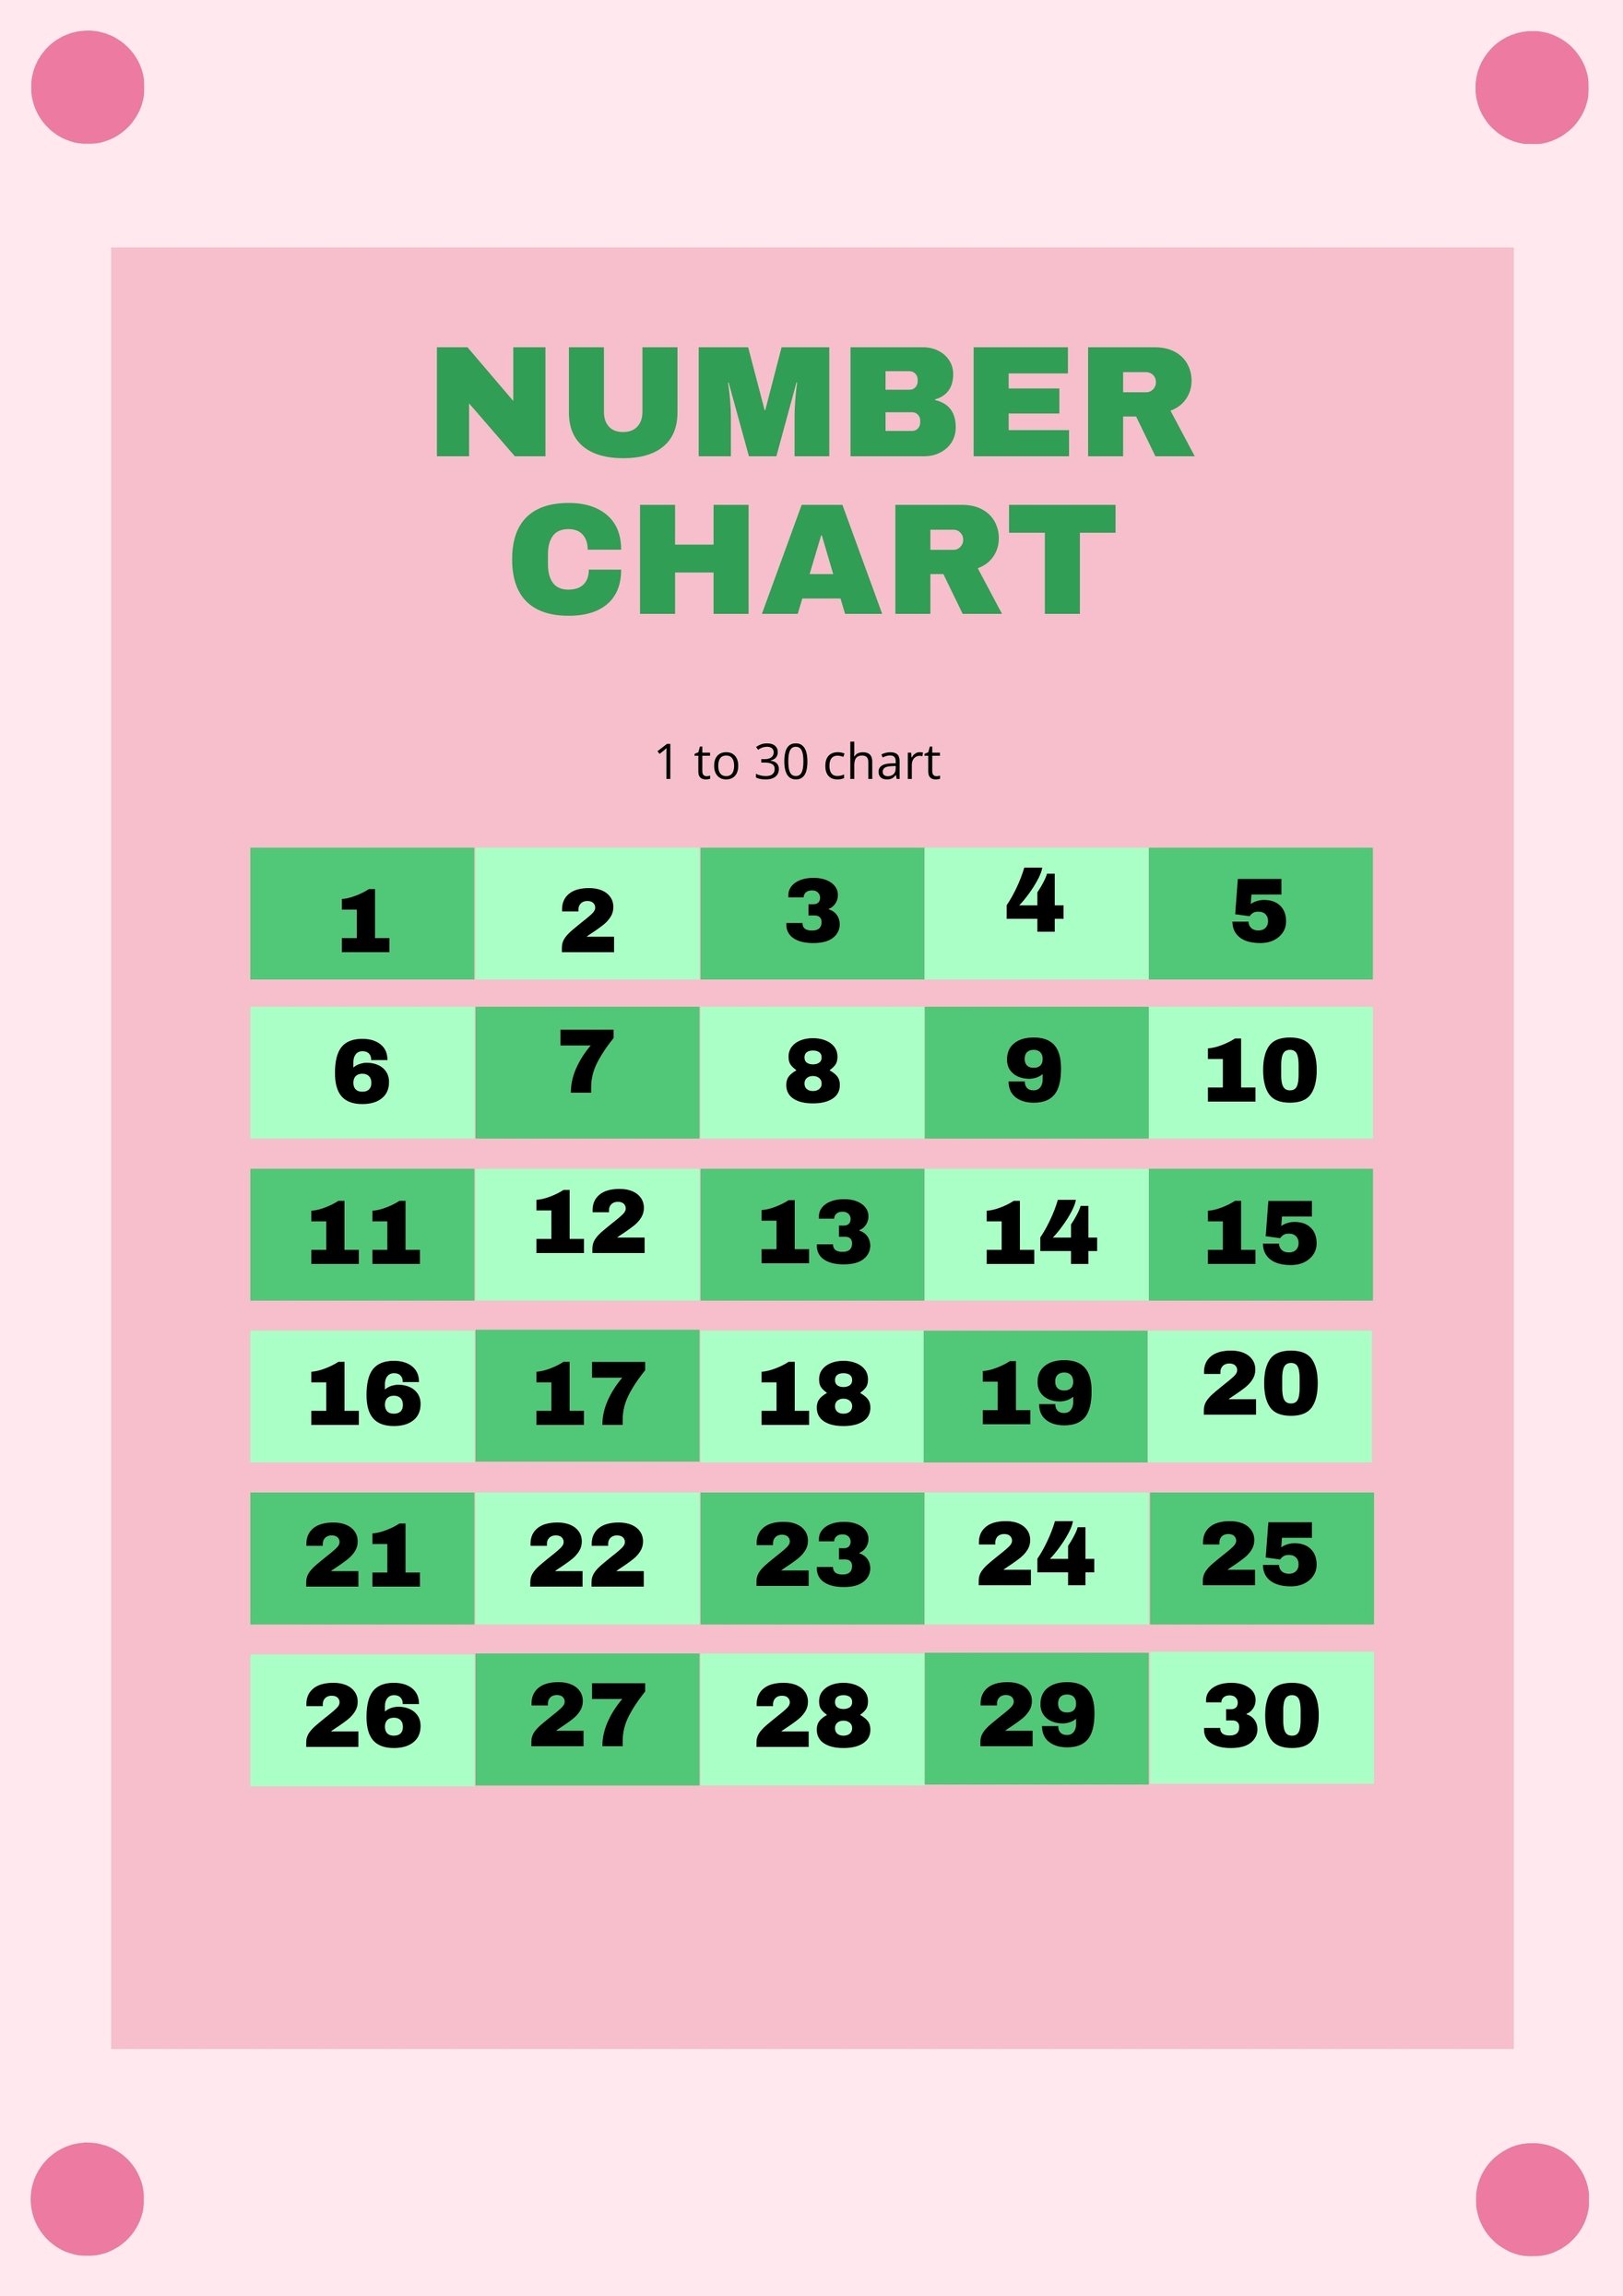 Number Chart in PDF, Illustrator